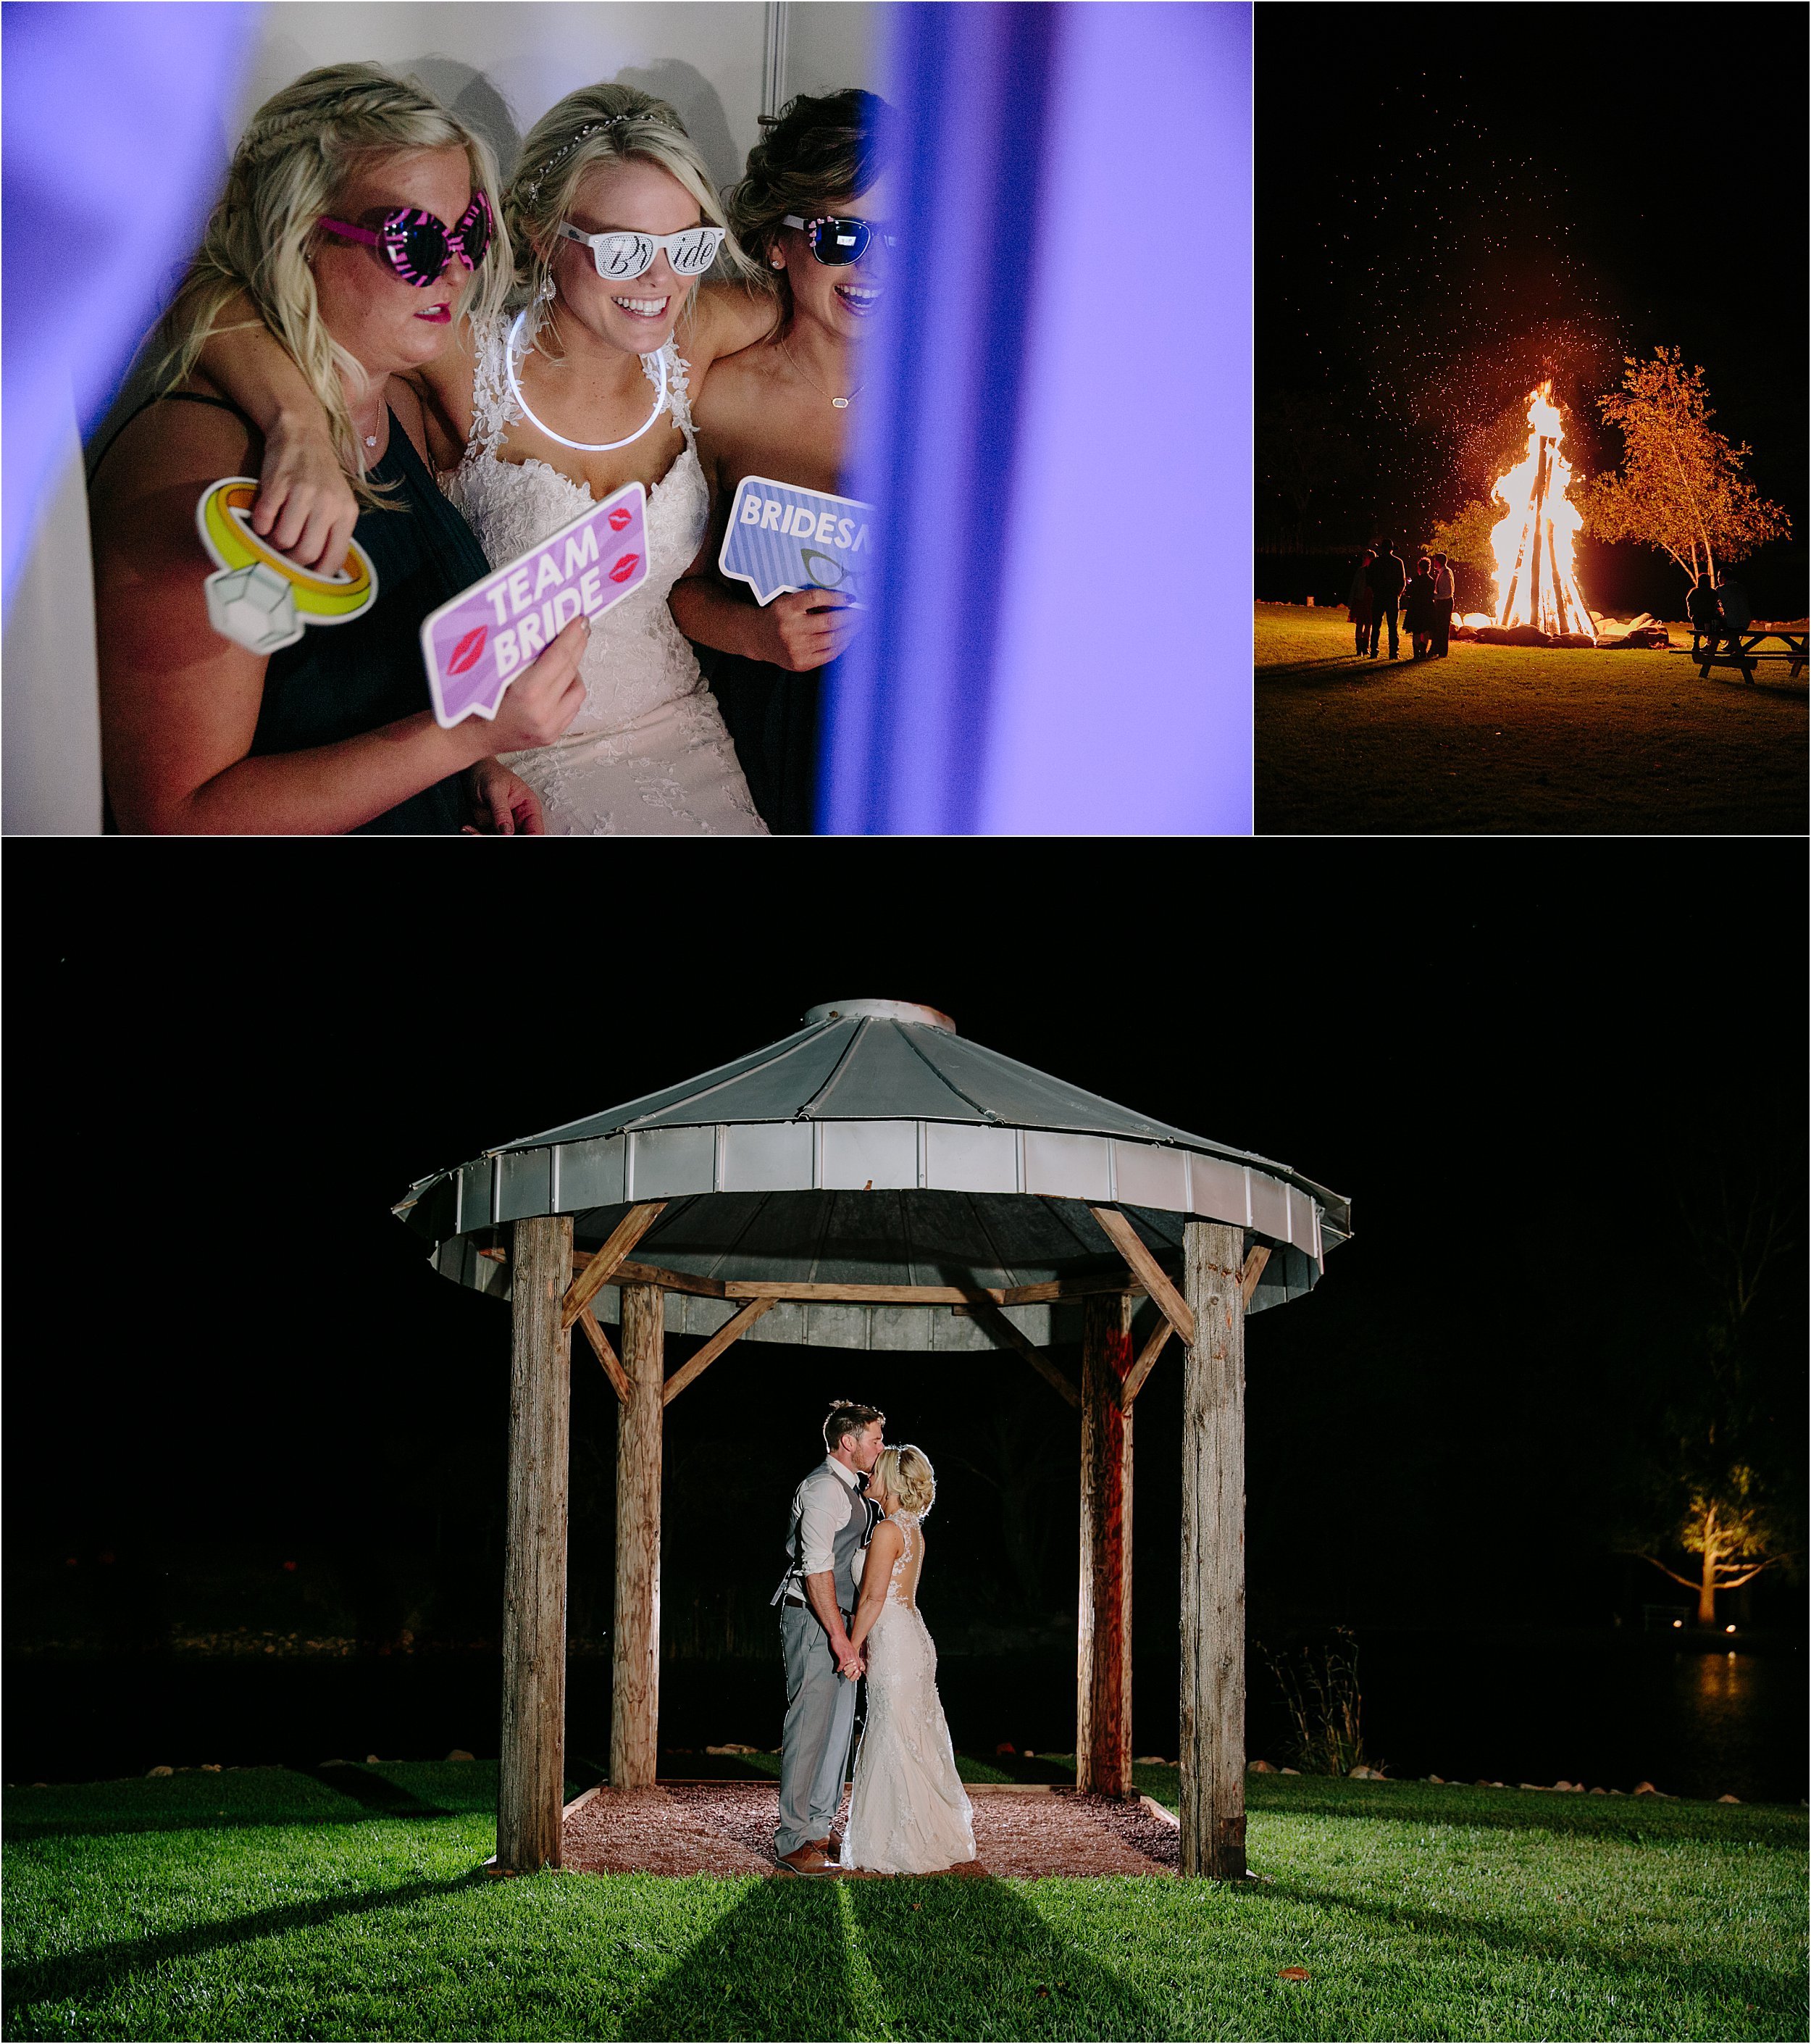 38-bride-photo-booth-bonfire.JPG